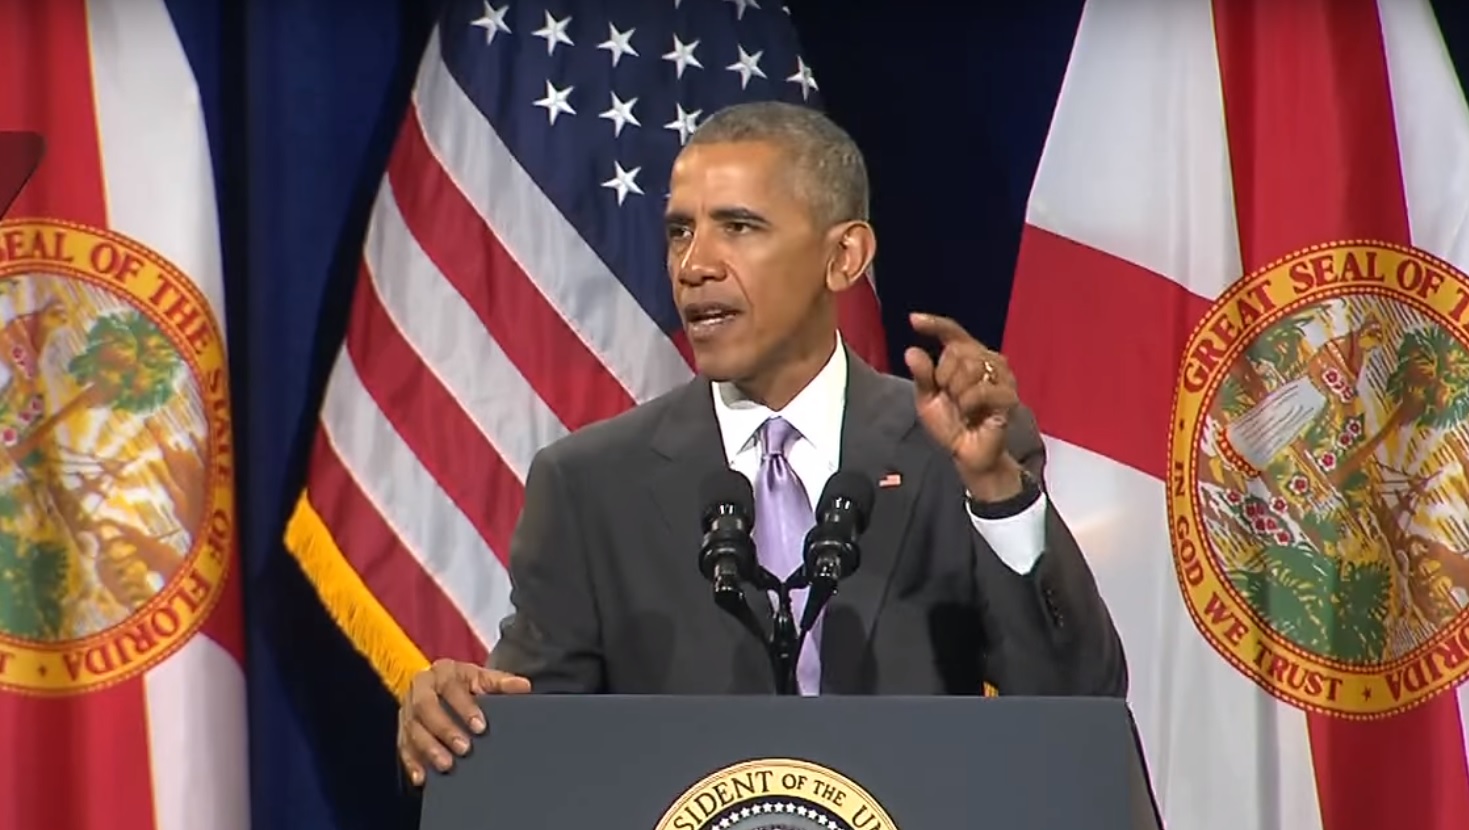 Barack Obama gives ACA speech